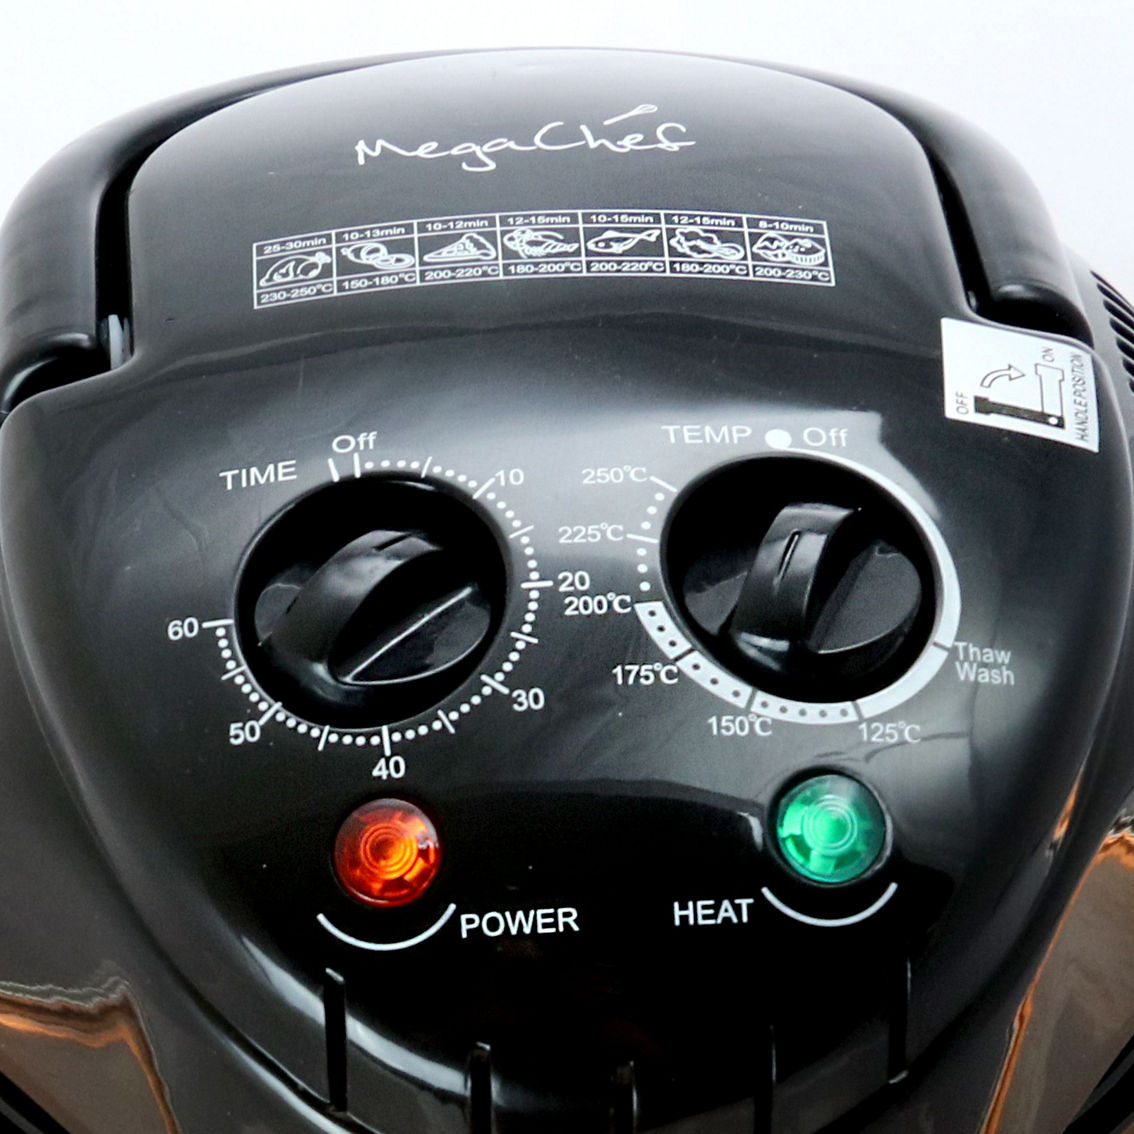 MegaChef Multipurpose Countertop Halogen Oven Air Fryer/Rotisserie/Roaster in Bl - Image 4 of 5